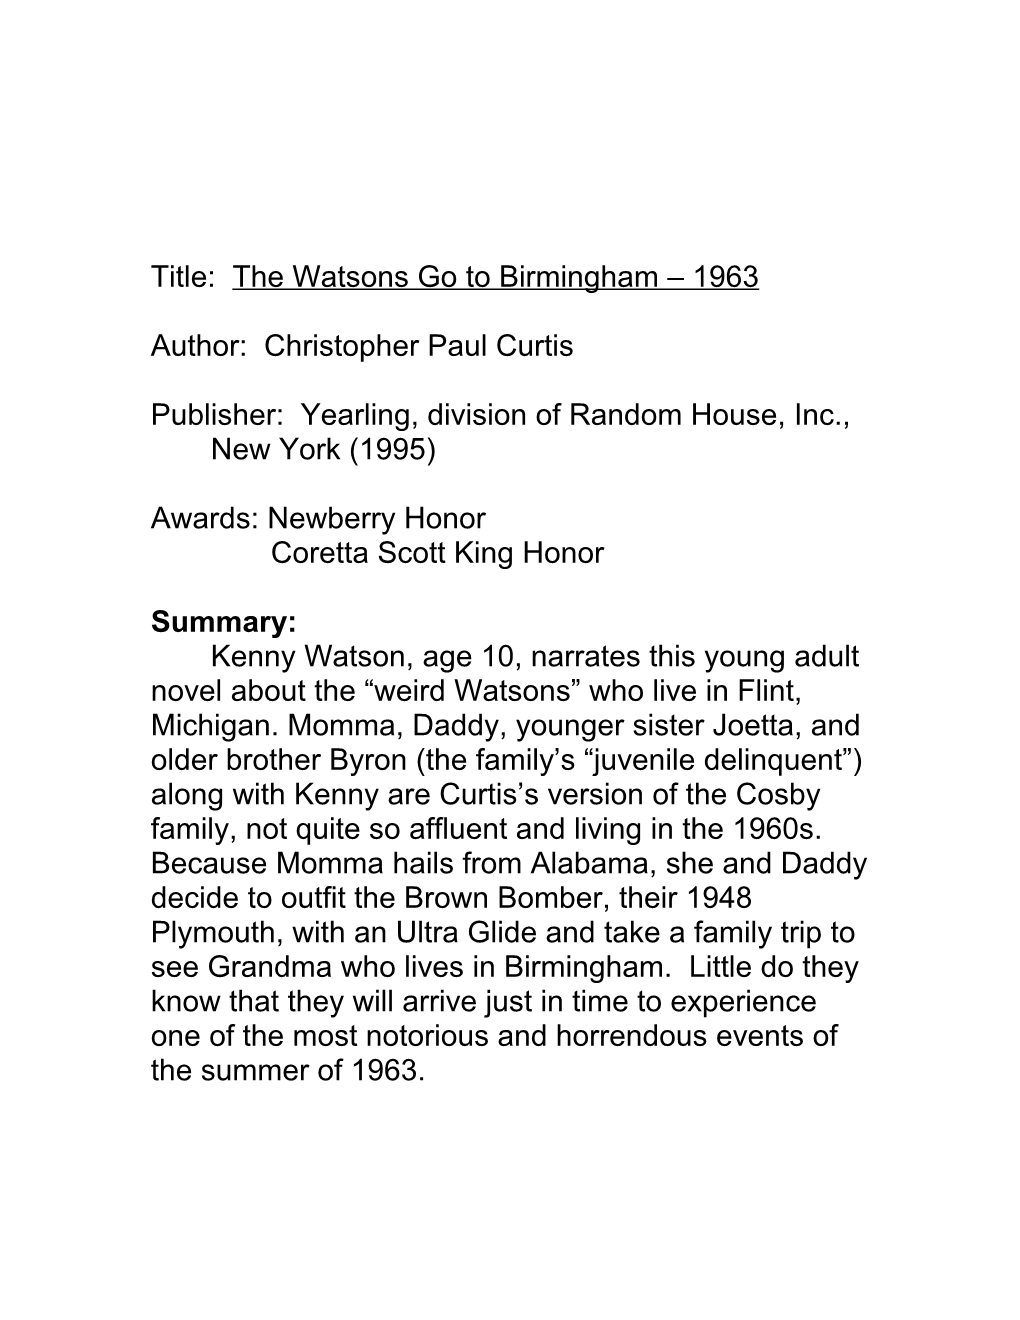 Title: the Watsons Go to Birmingham 1963